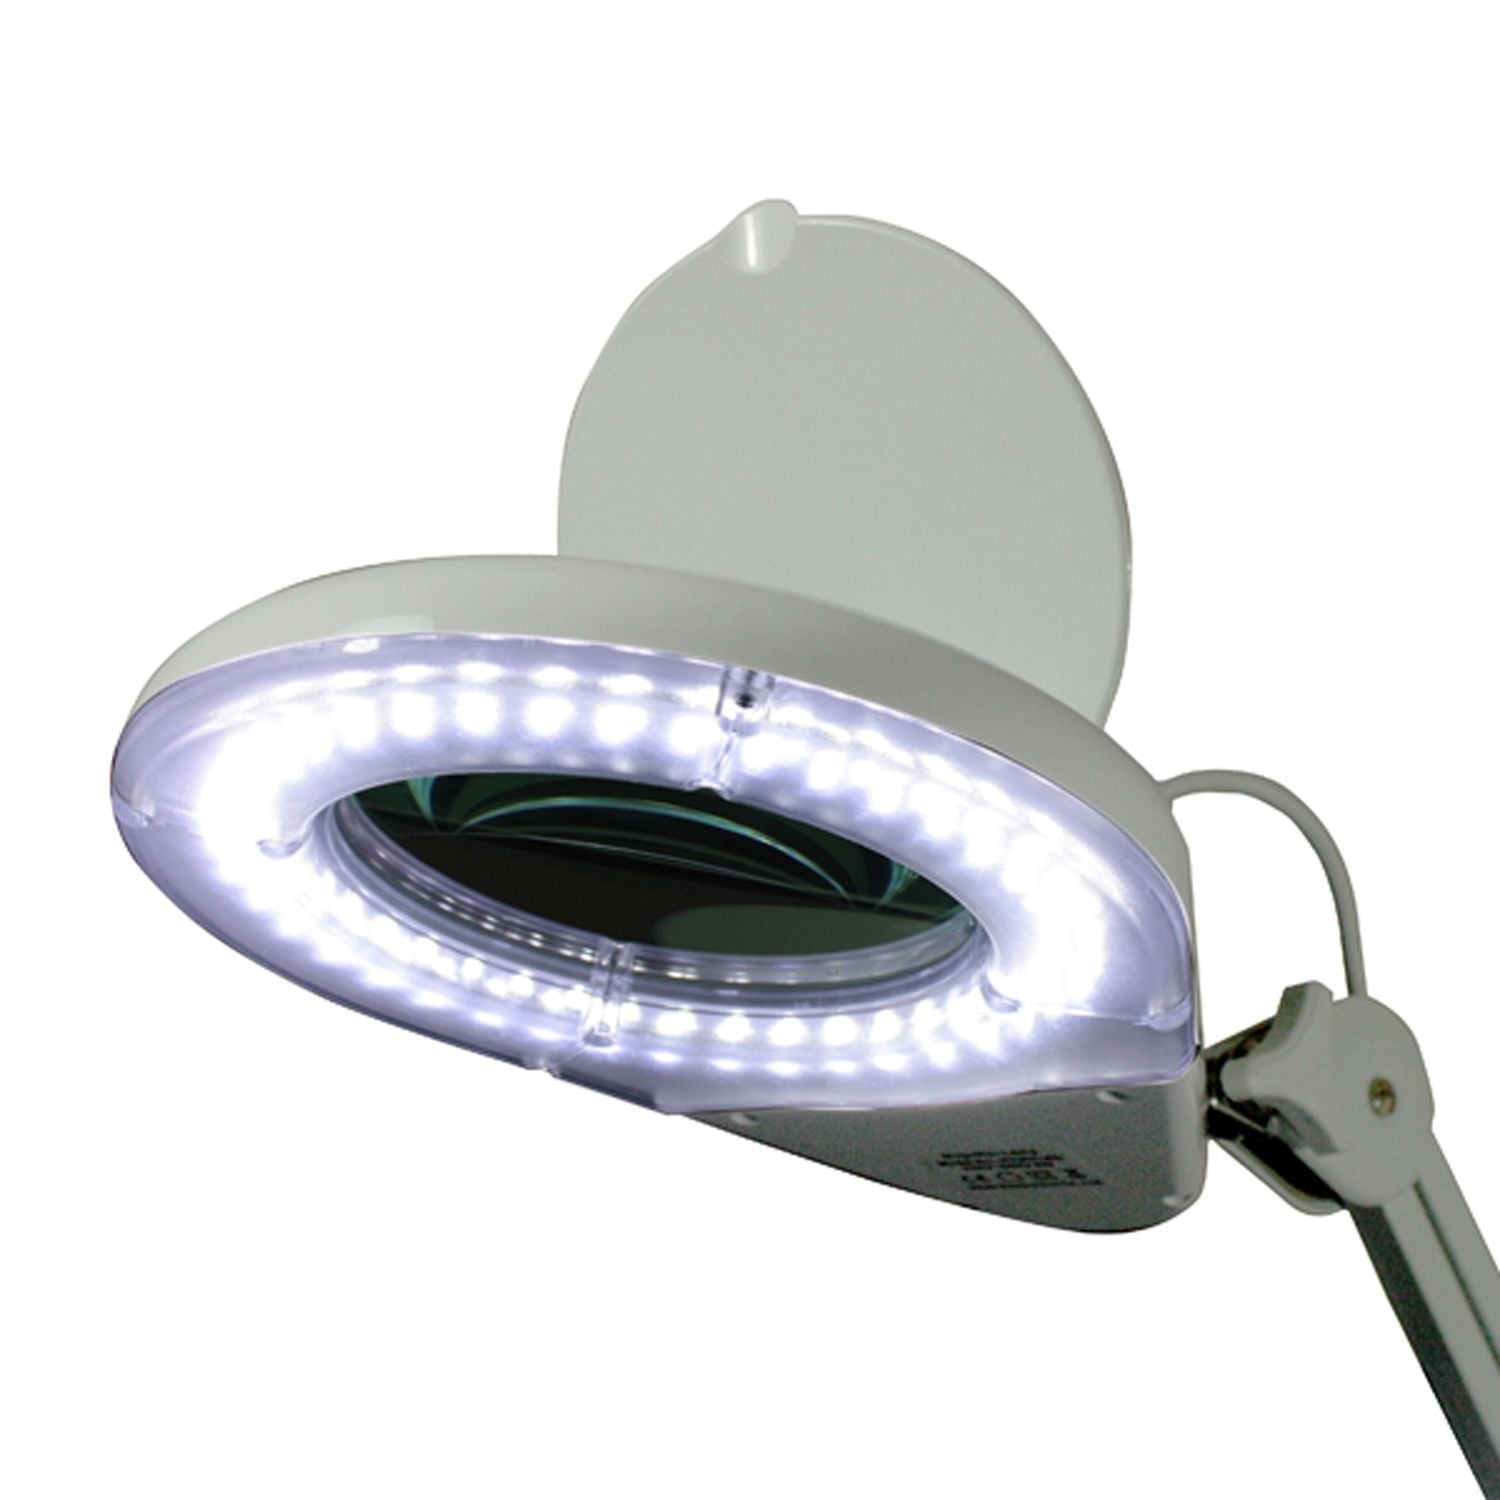 Daray Circular LED Magnifying Light | 6 Diopter, Desk Mounted